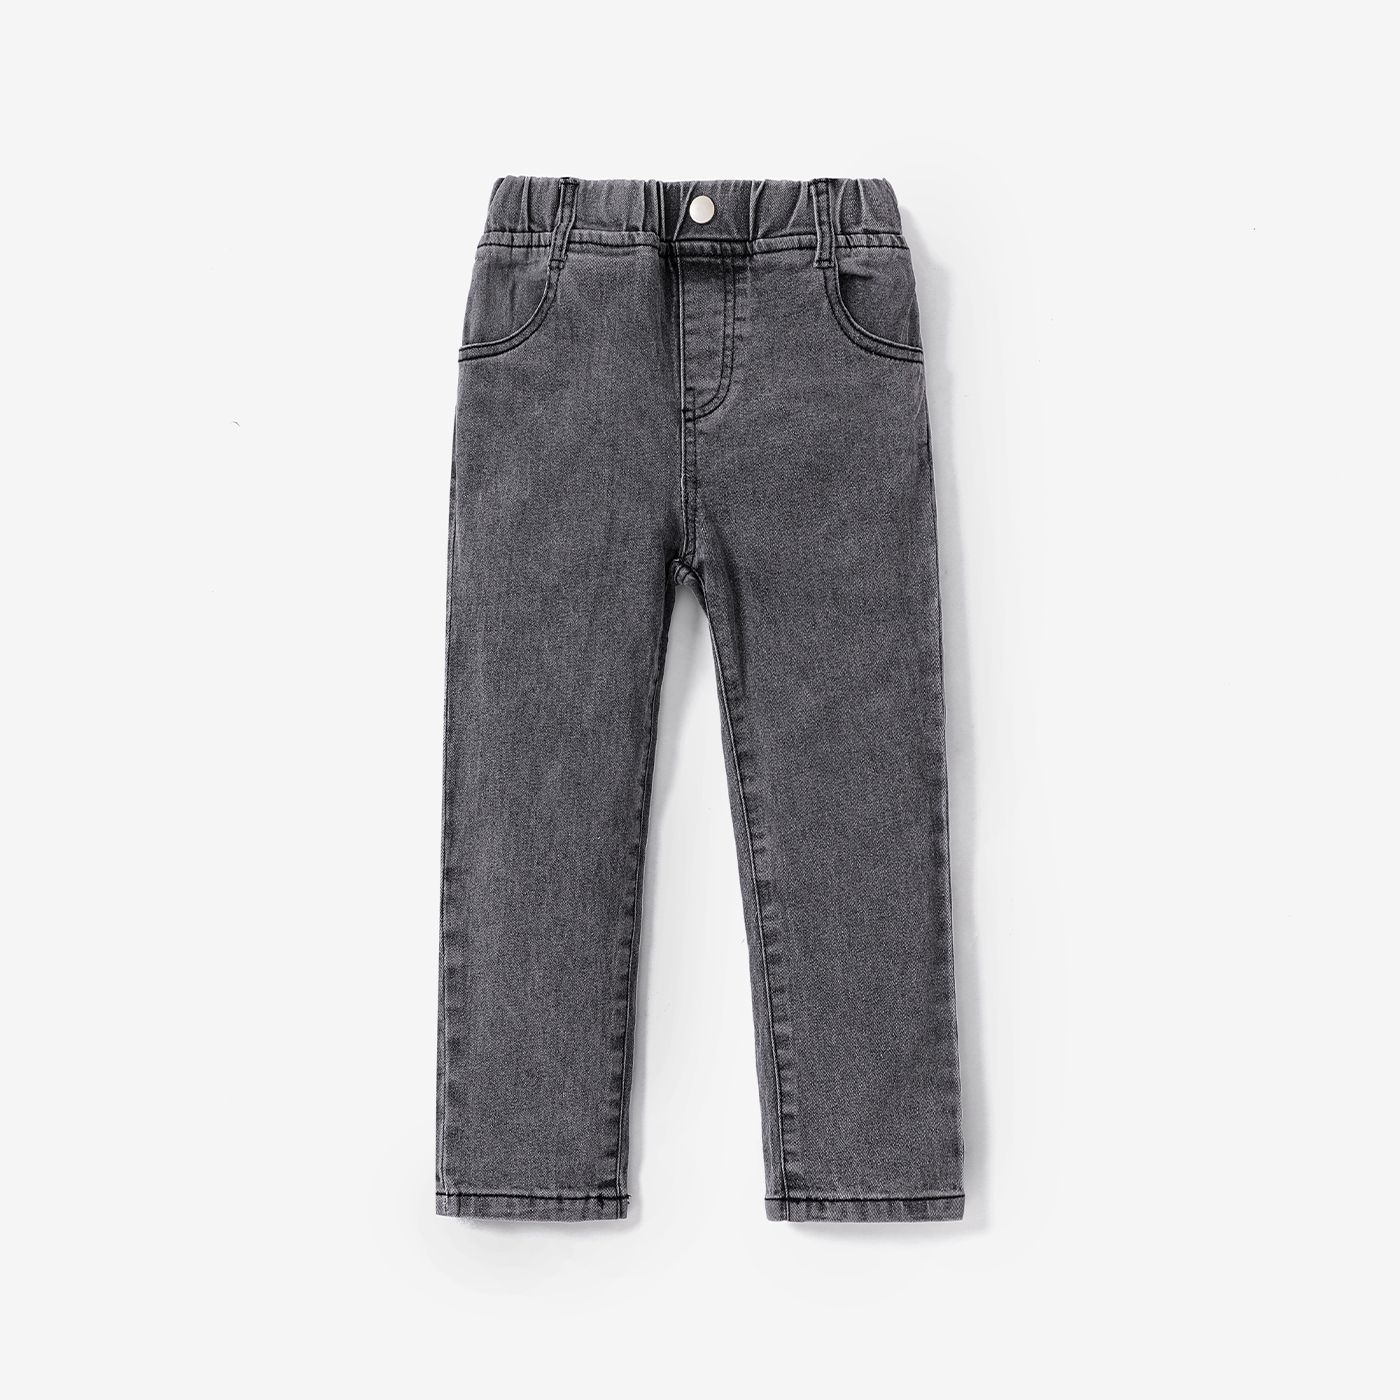 Toddler Boy Casual Elasticized Denim Jeans